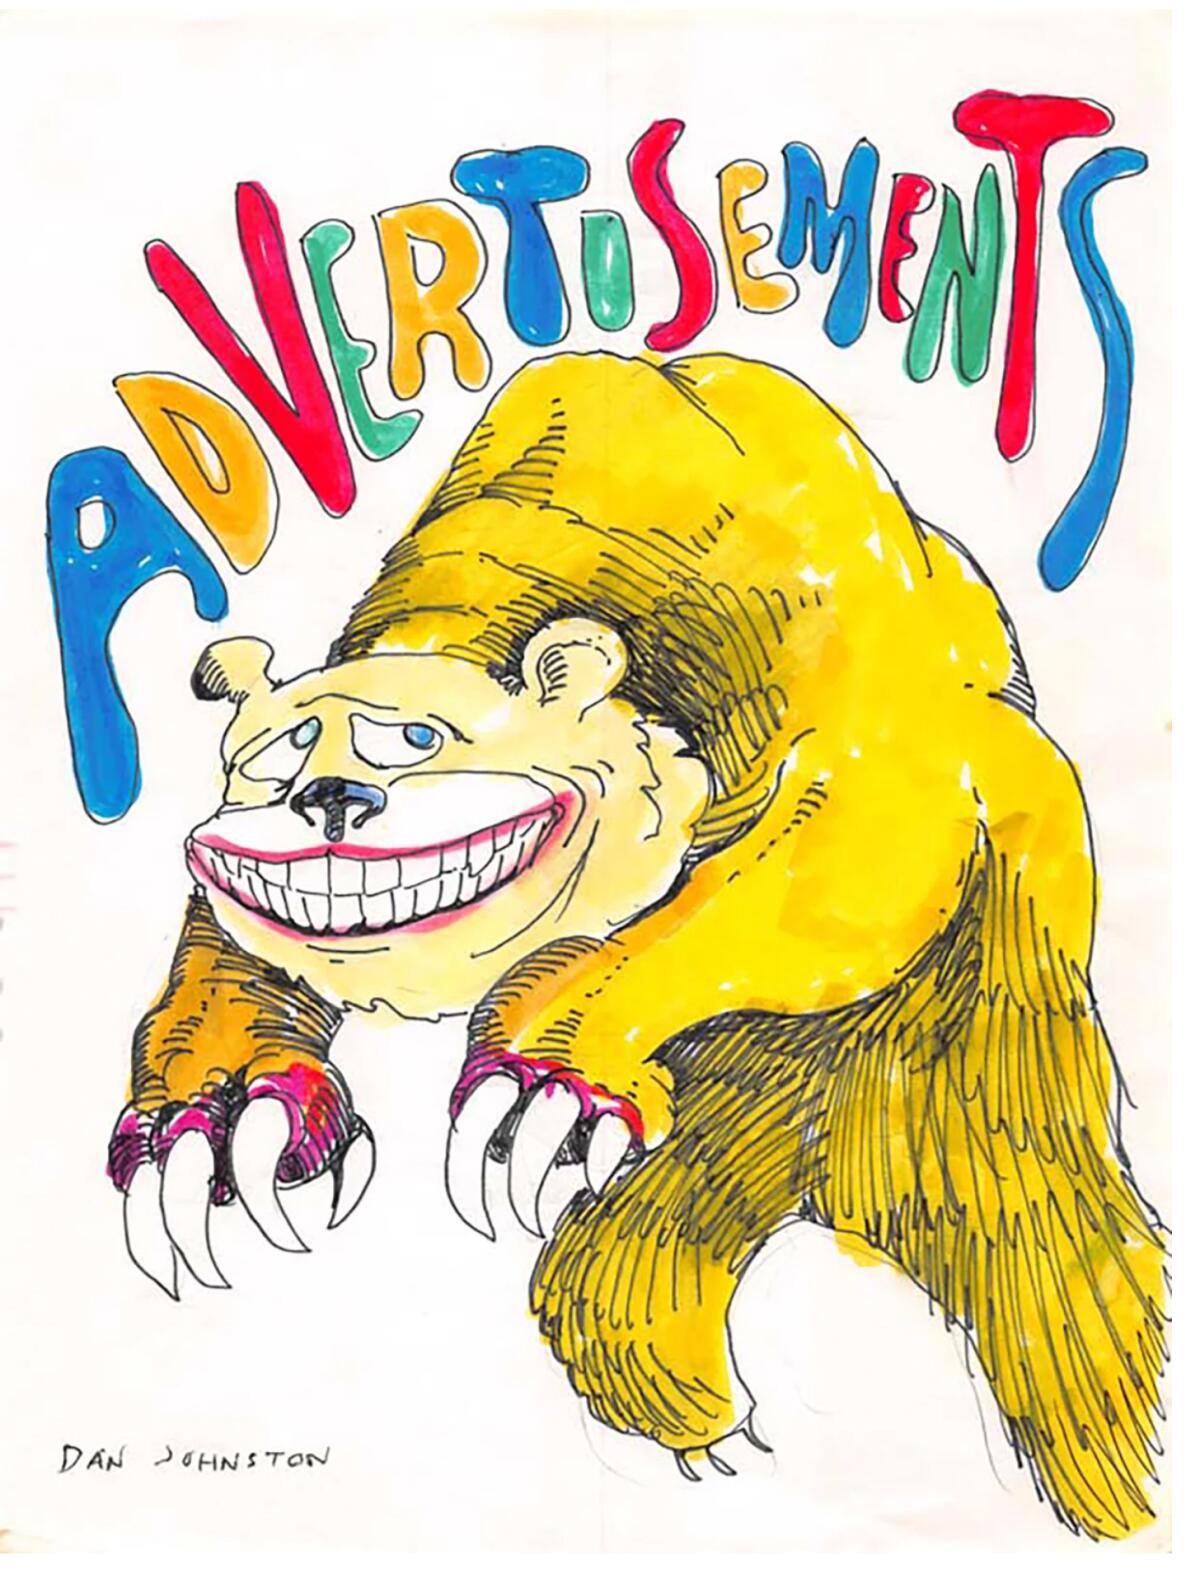 Daniel Johnston, "Advertisements," 1979 